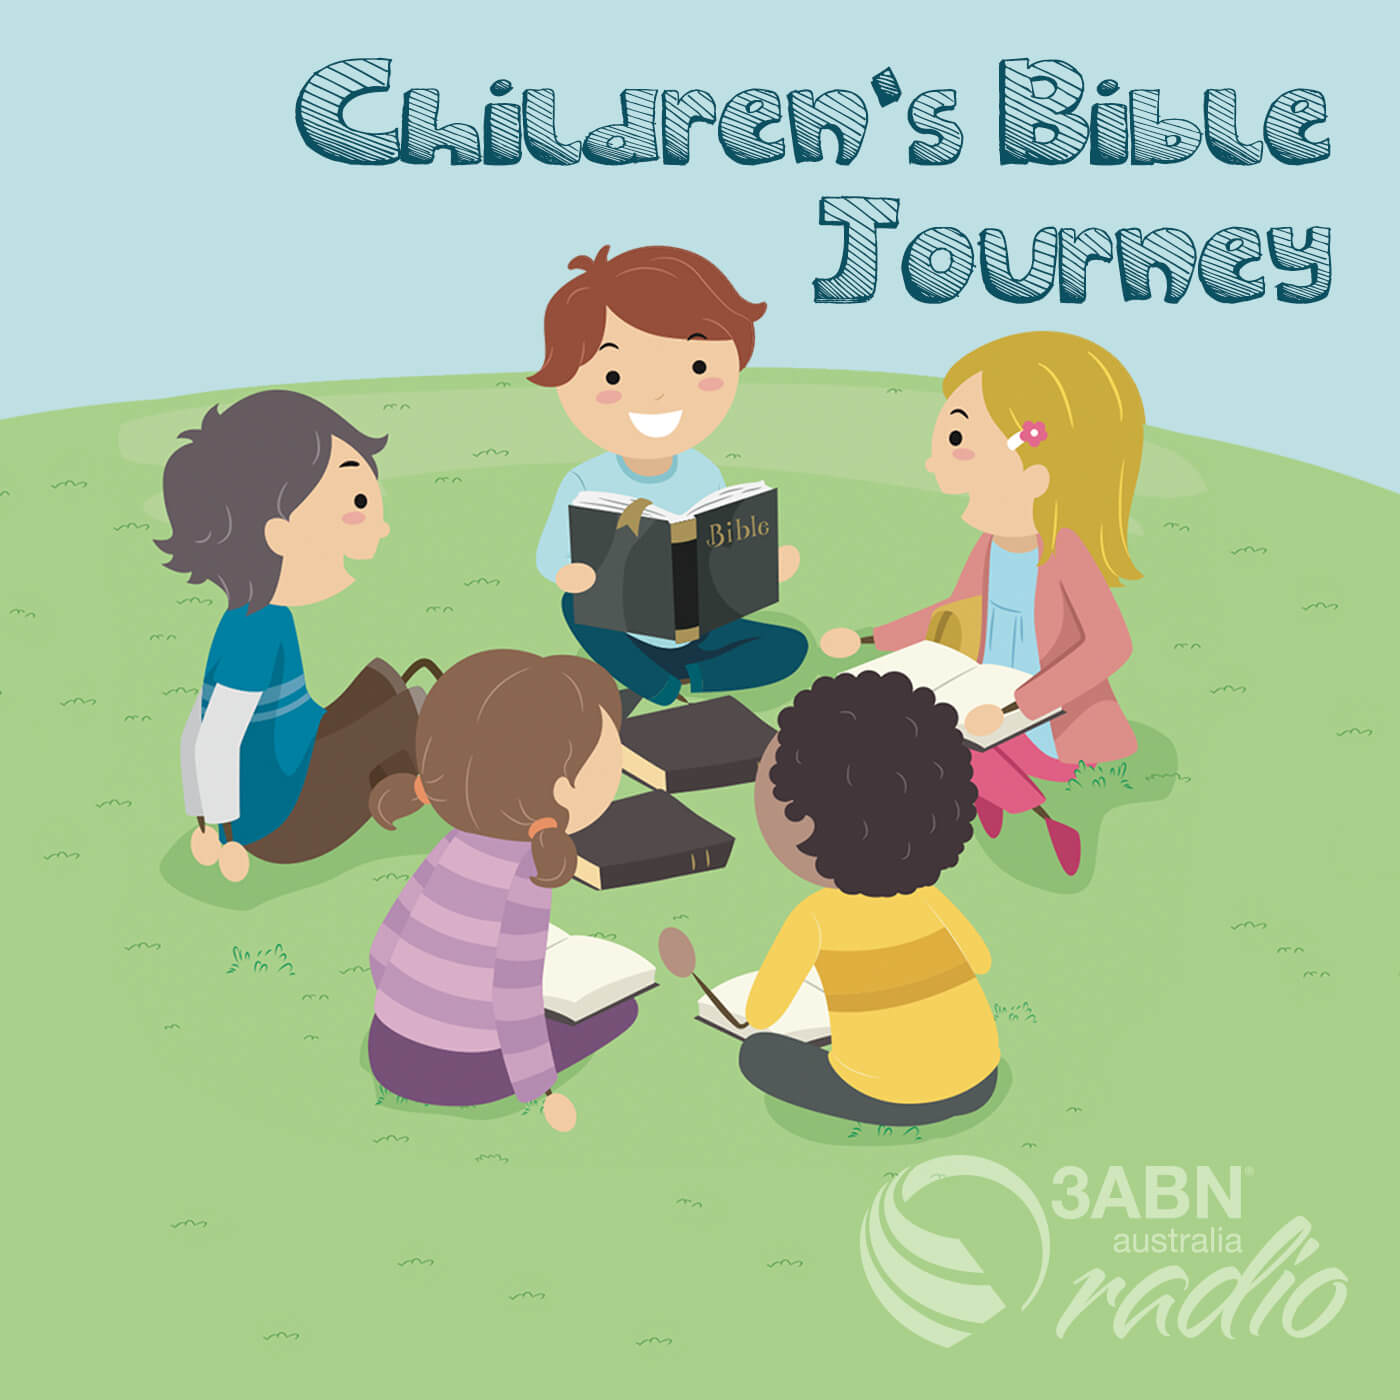 Children's Bible Journey - 2188